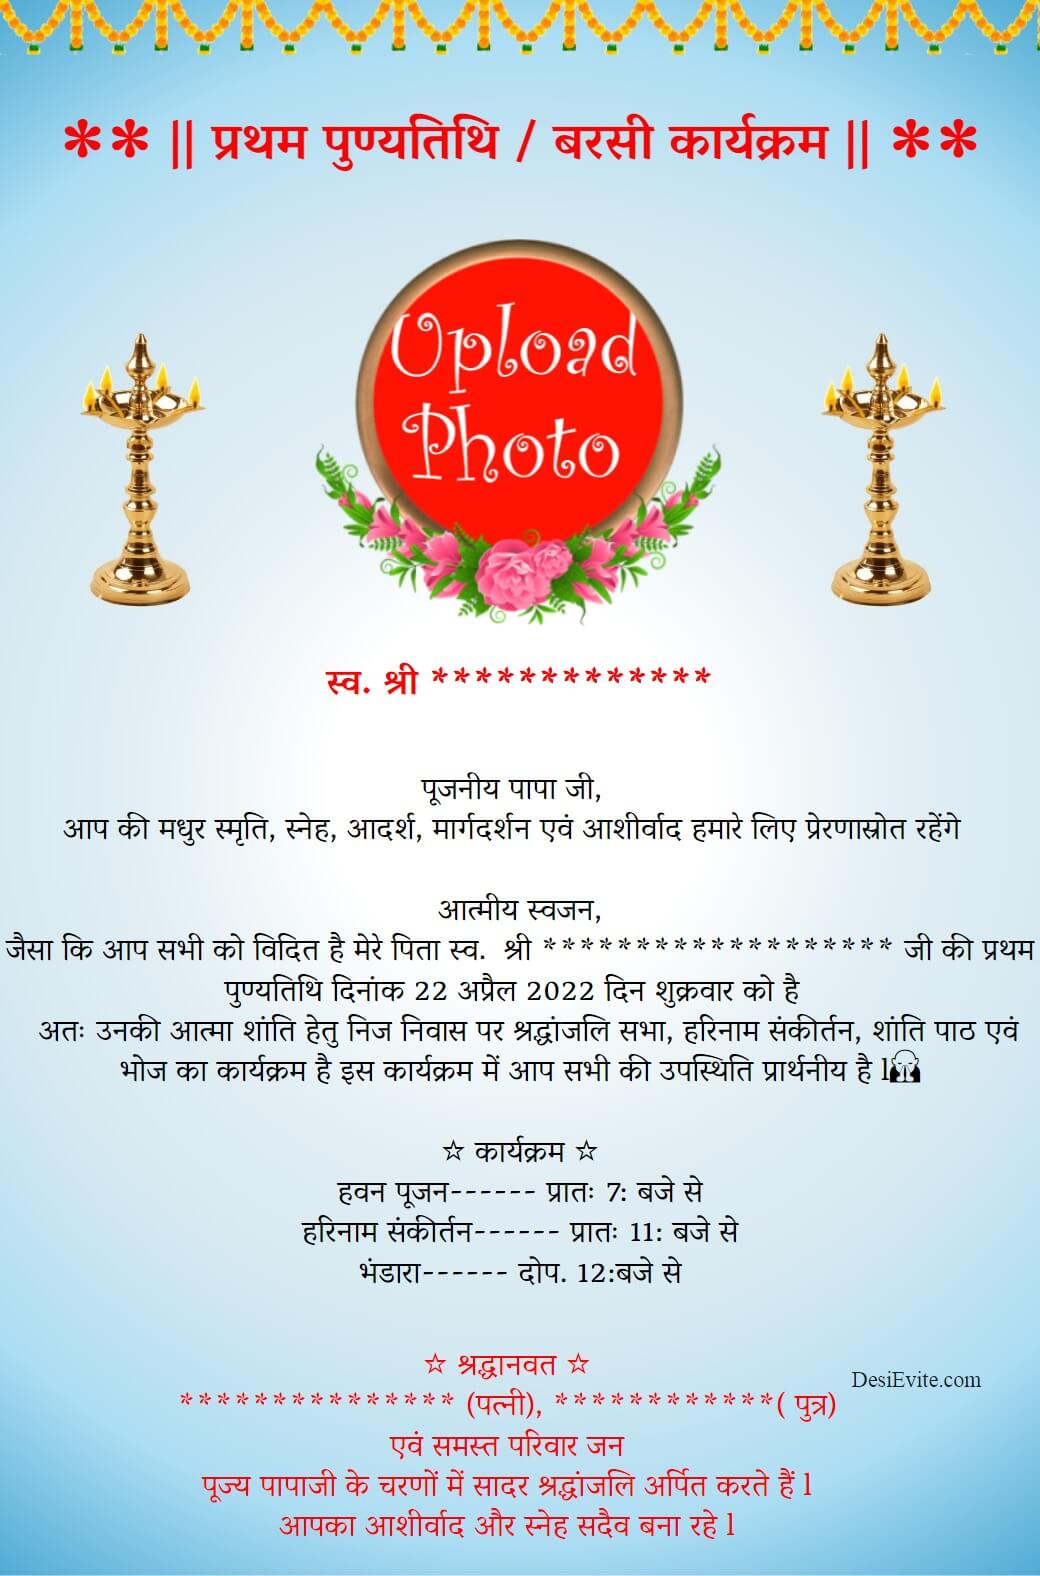 pratham punyatithi barsi karyakram hindi card 117 